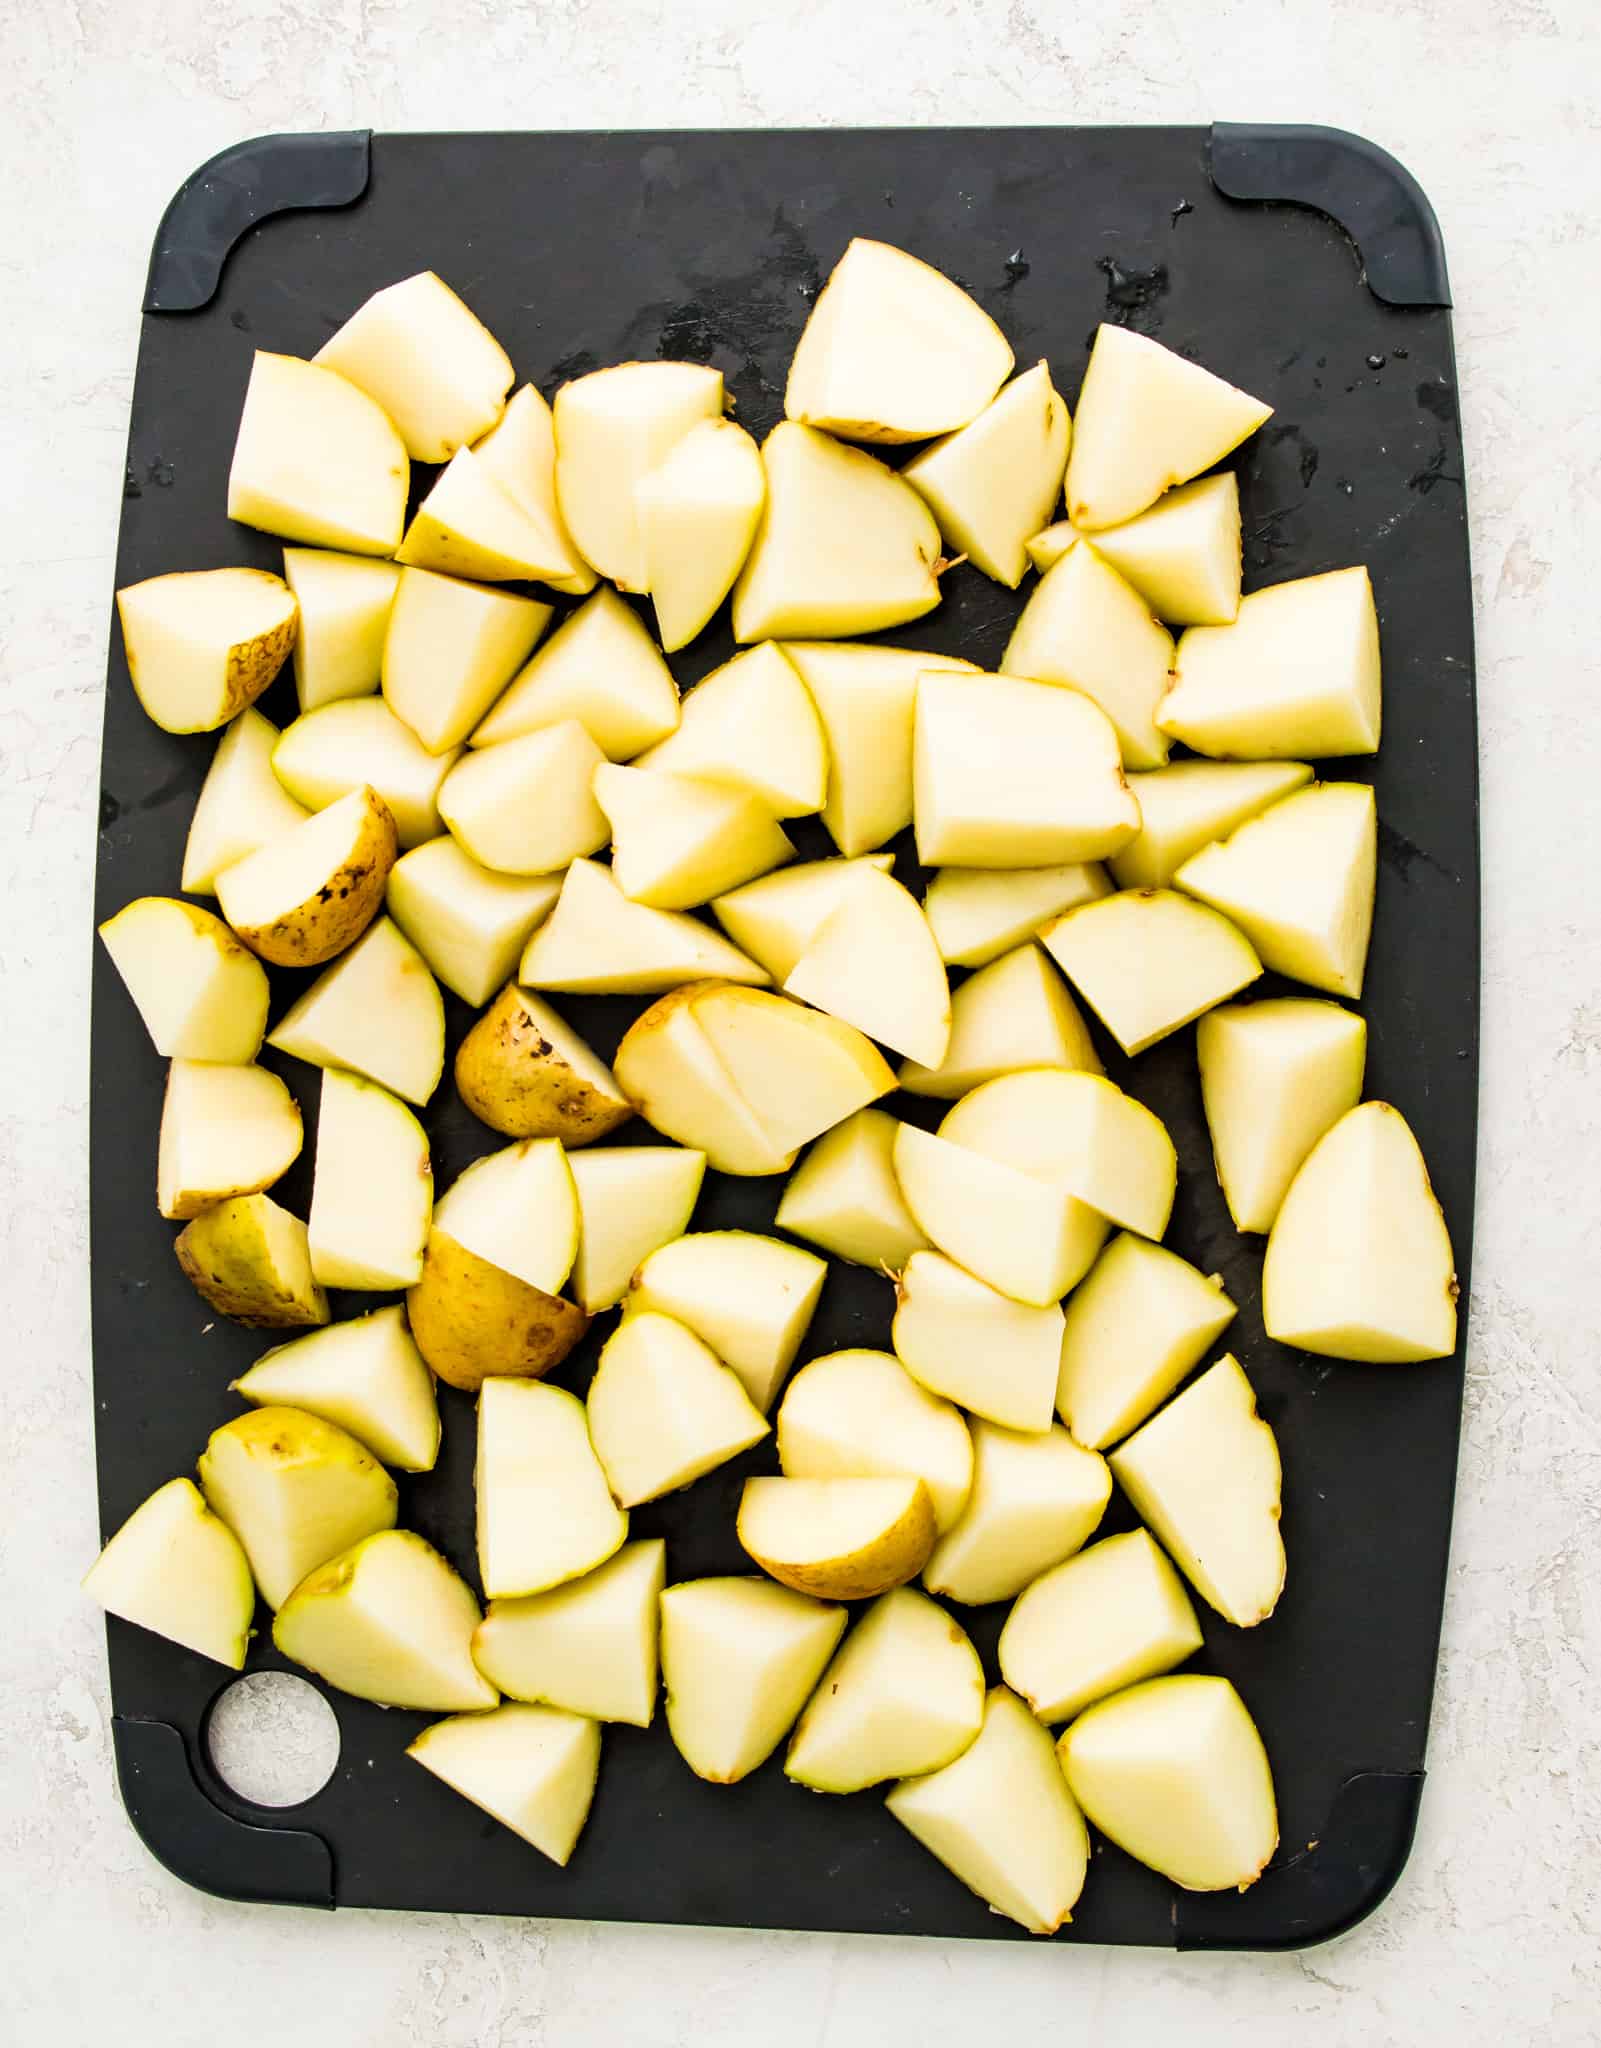 Chopped, raw potatoes on a cutting board